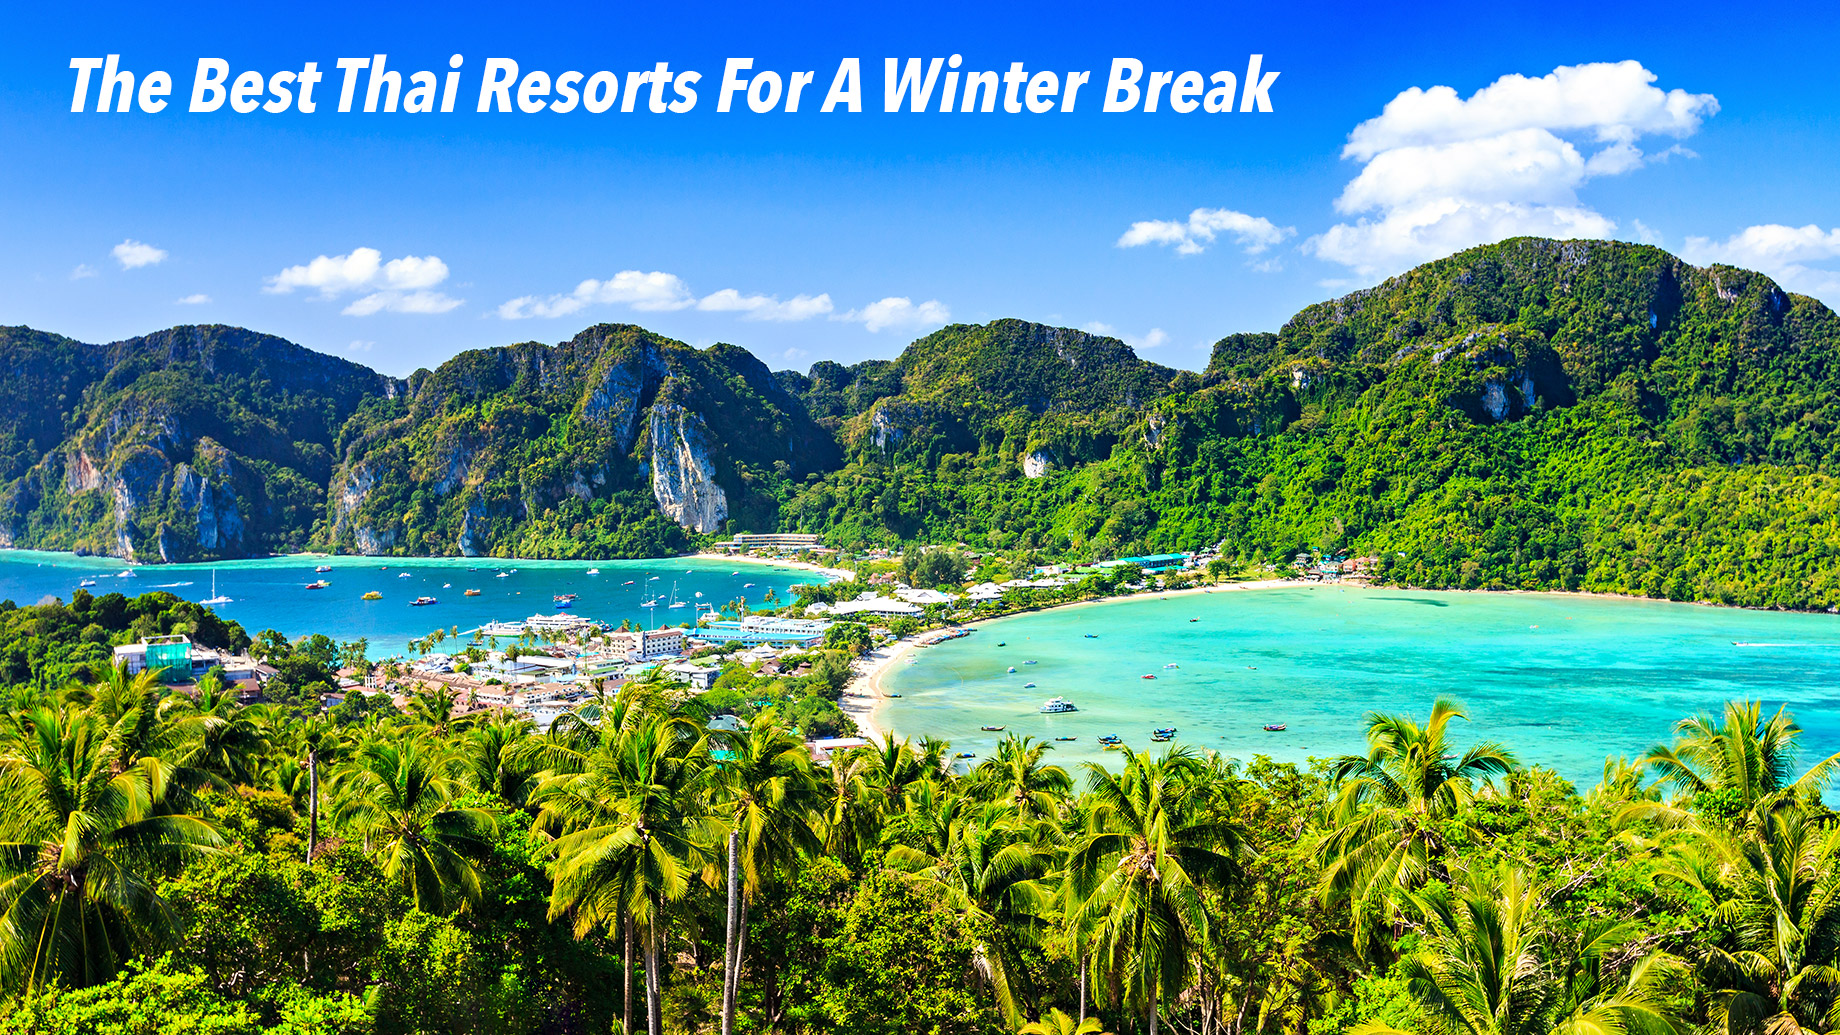 The Best Thai Resorts For A Winter Break